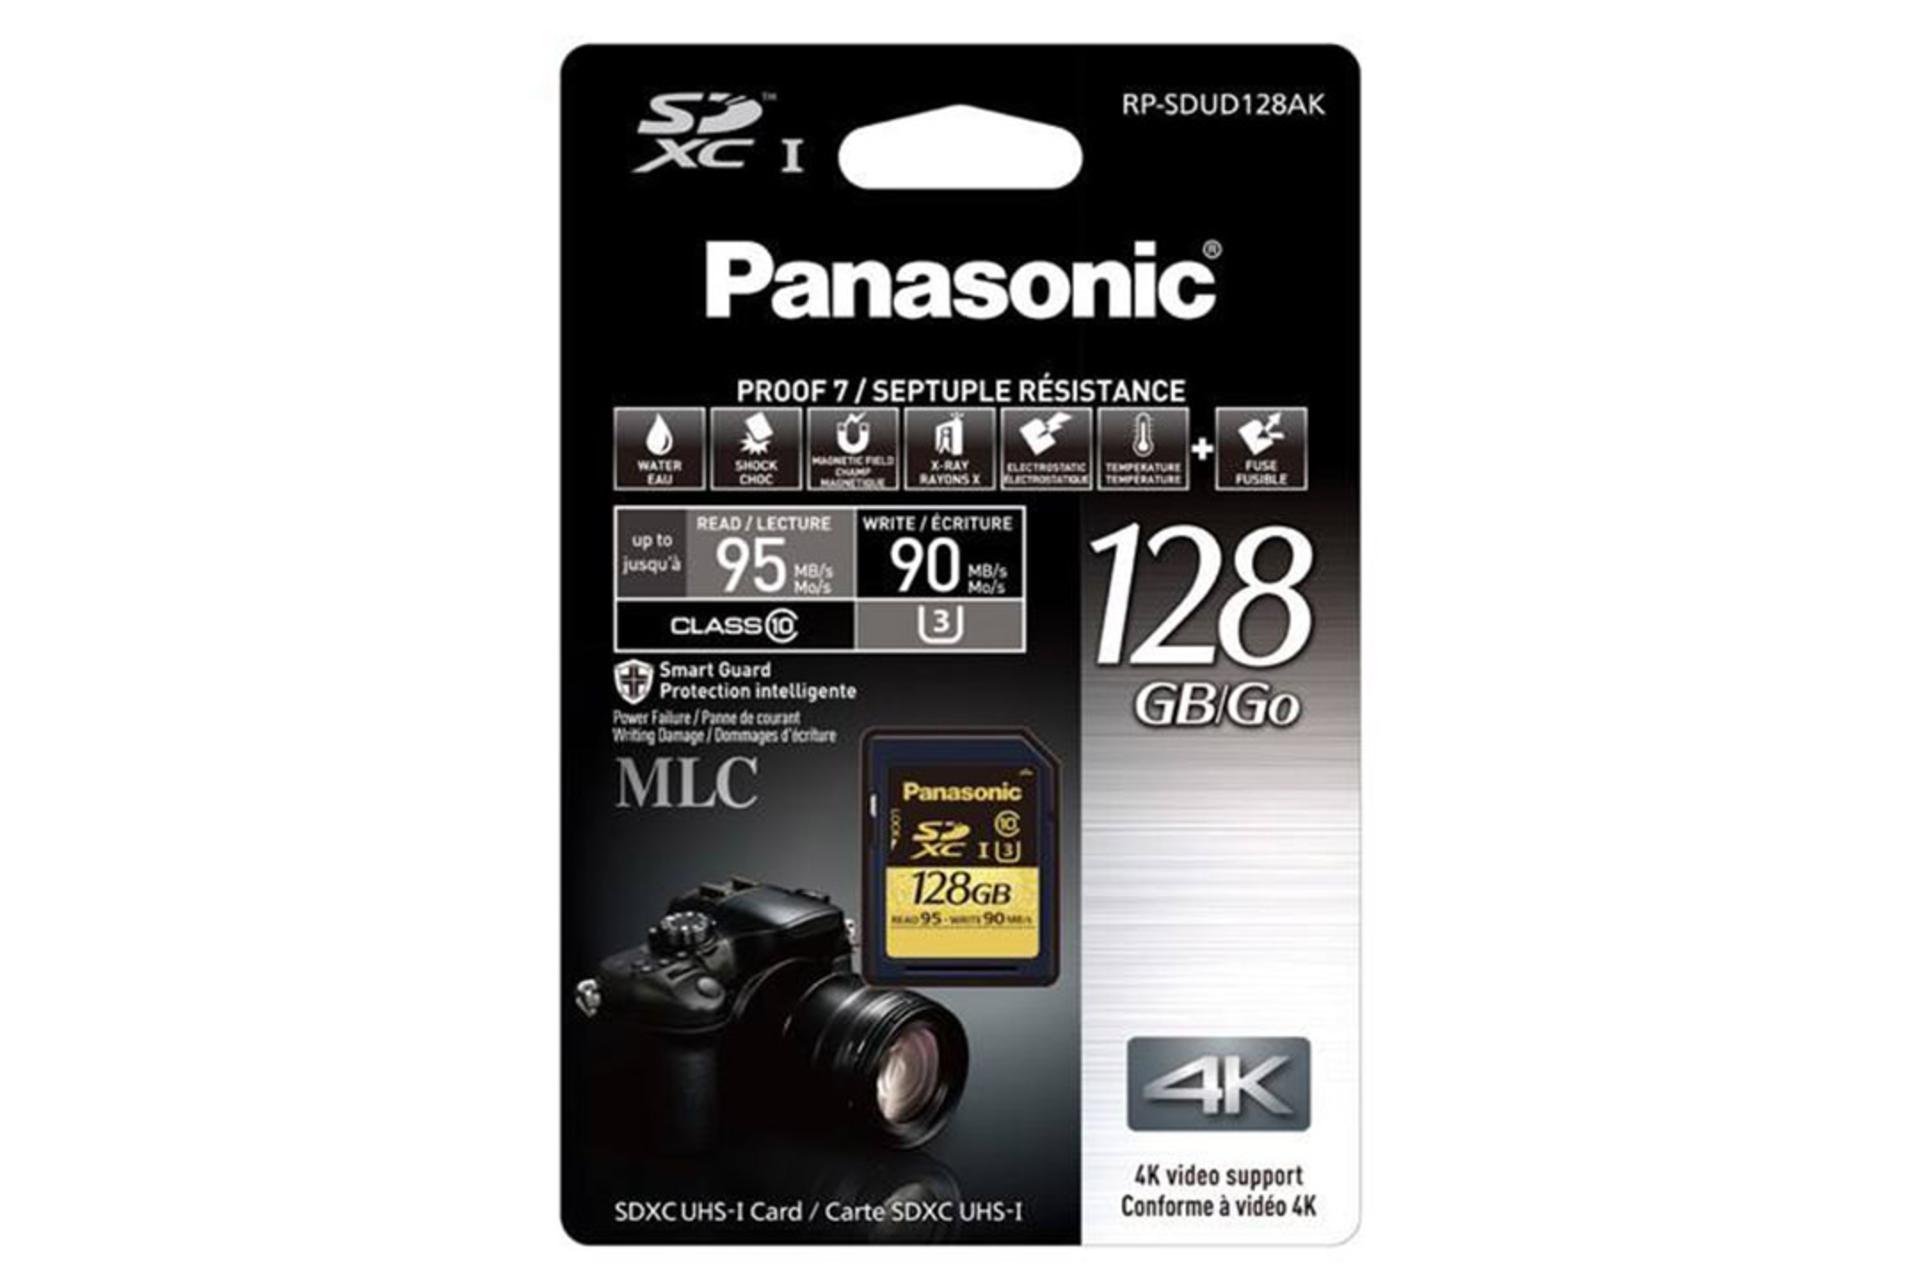 Panasonic RP-SDUD128AK SDXC Class 10 UHS-I U3 128GB